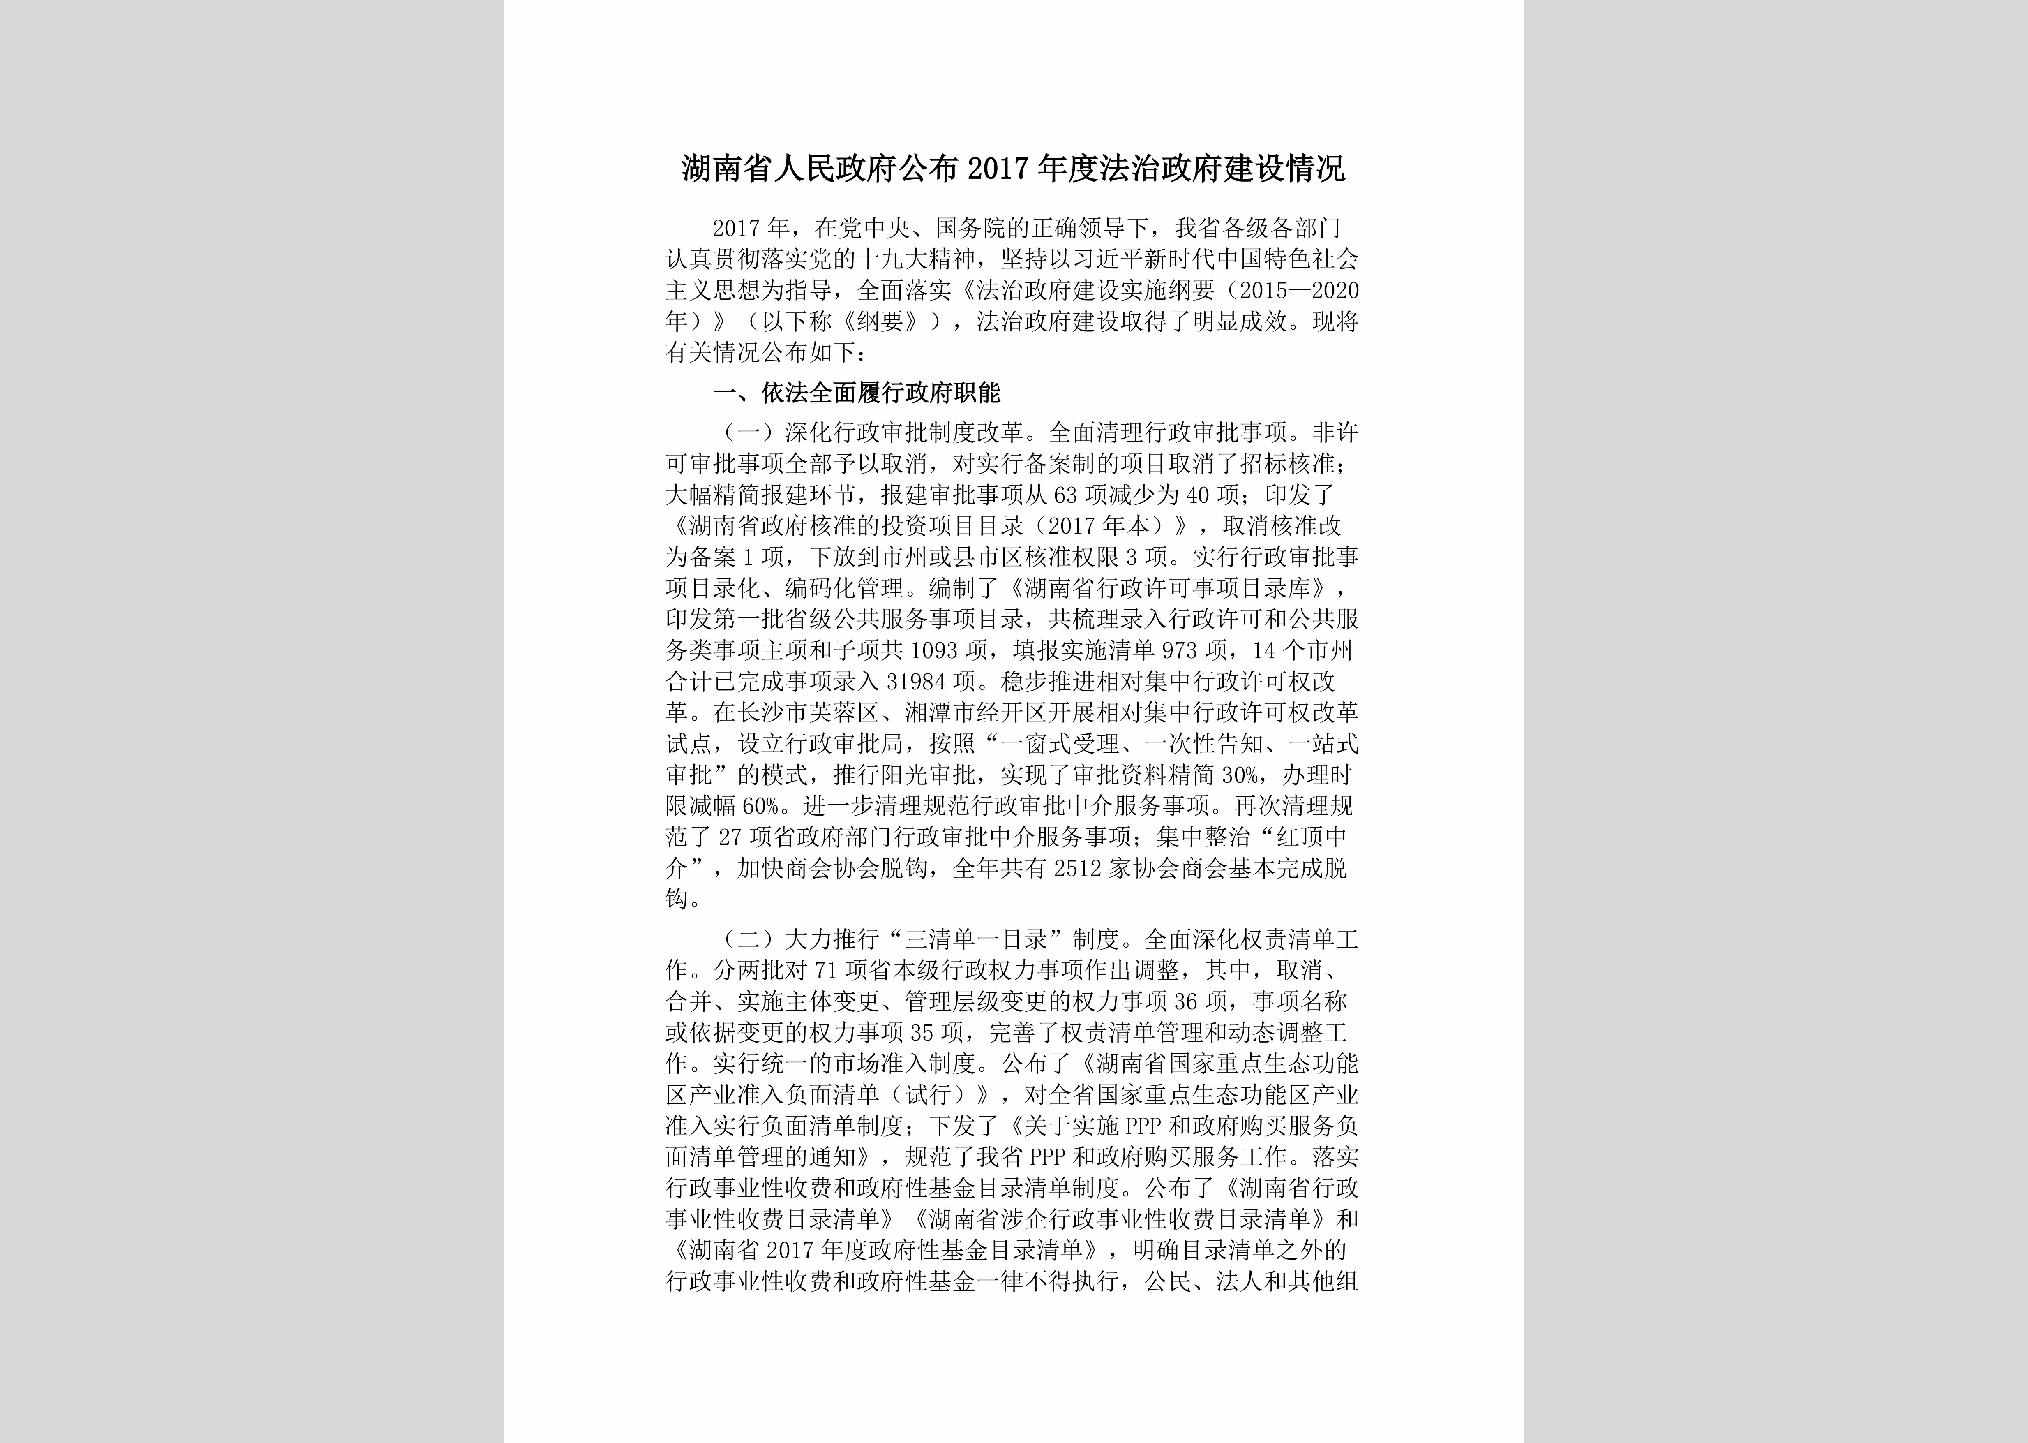 HUN-ZFGBJSQK-2018：湖南省人民政府公布2017年度法治政府建设情况